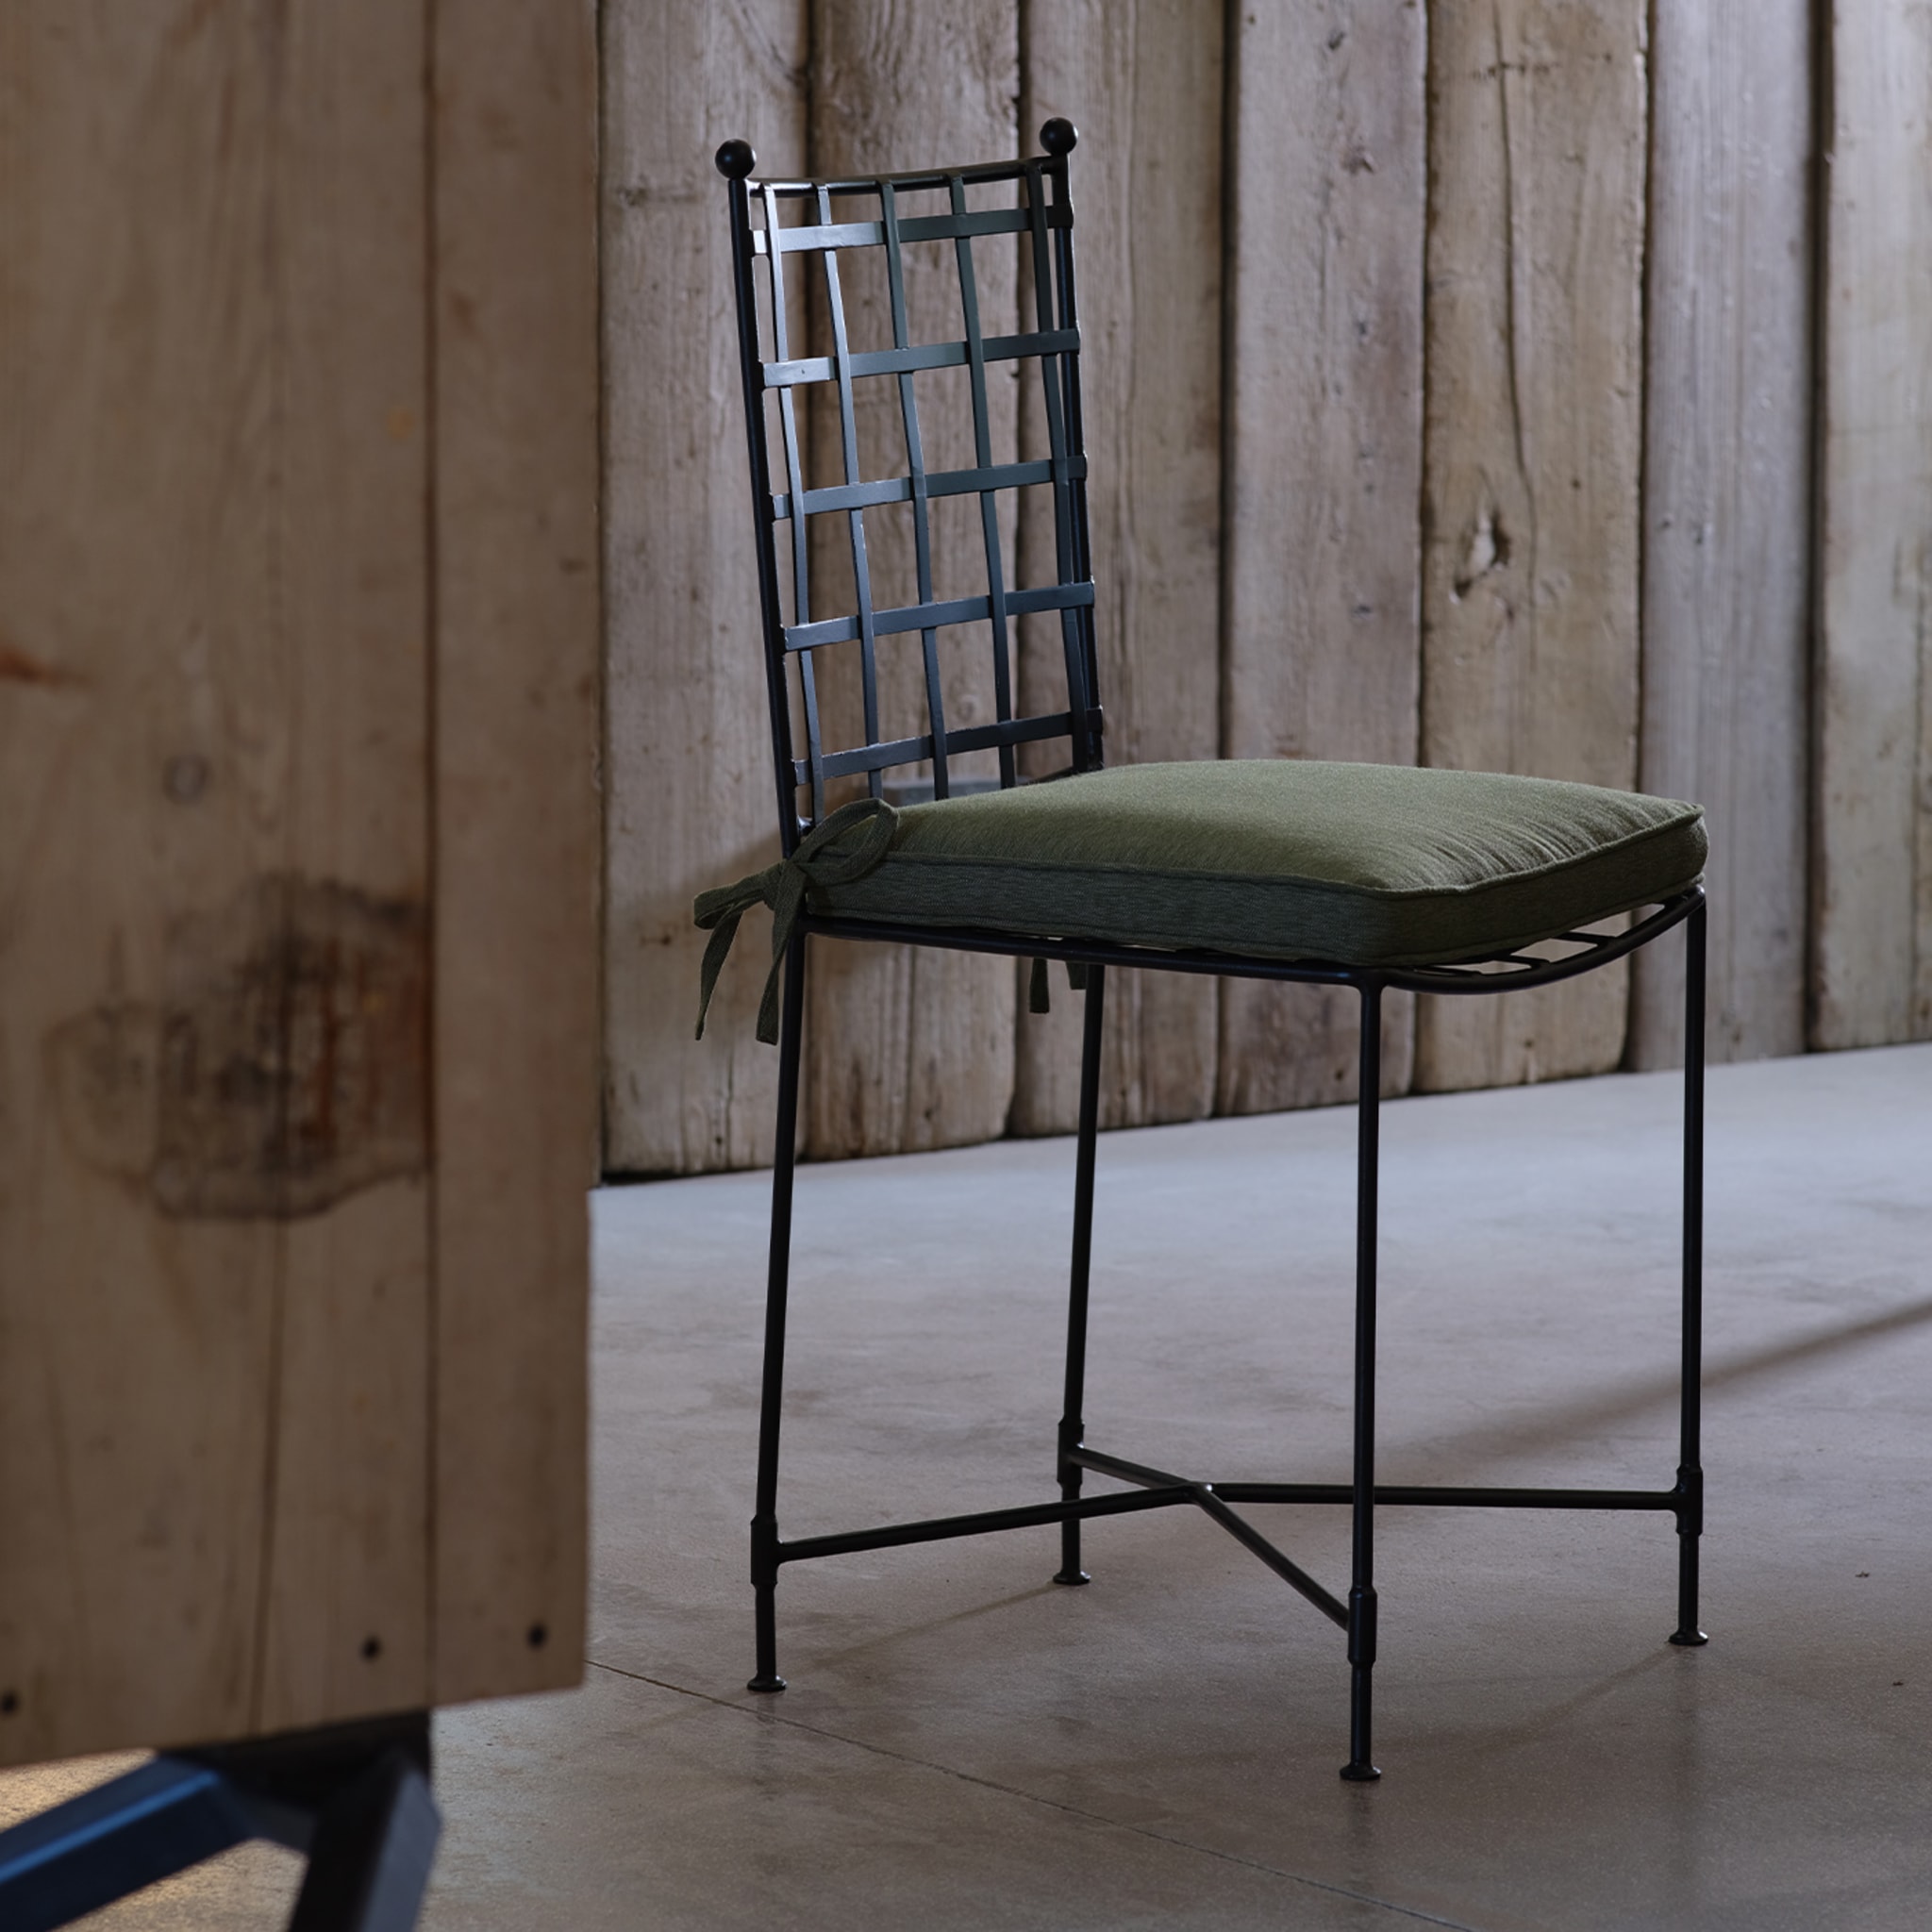 The Classic Green Garden Chair - Alternative view 1